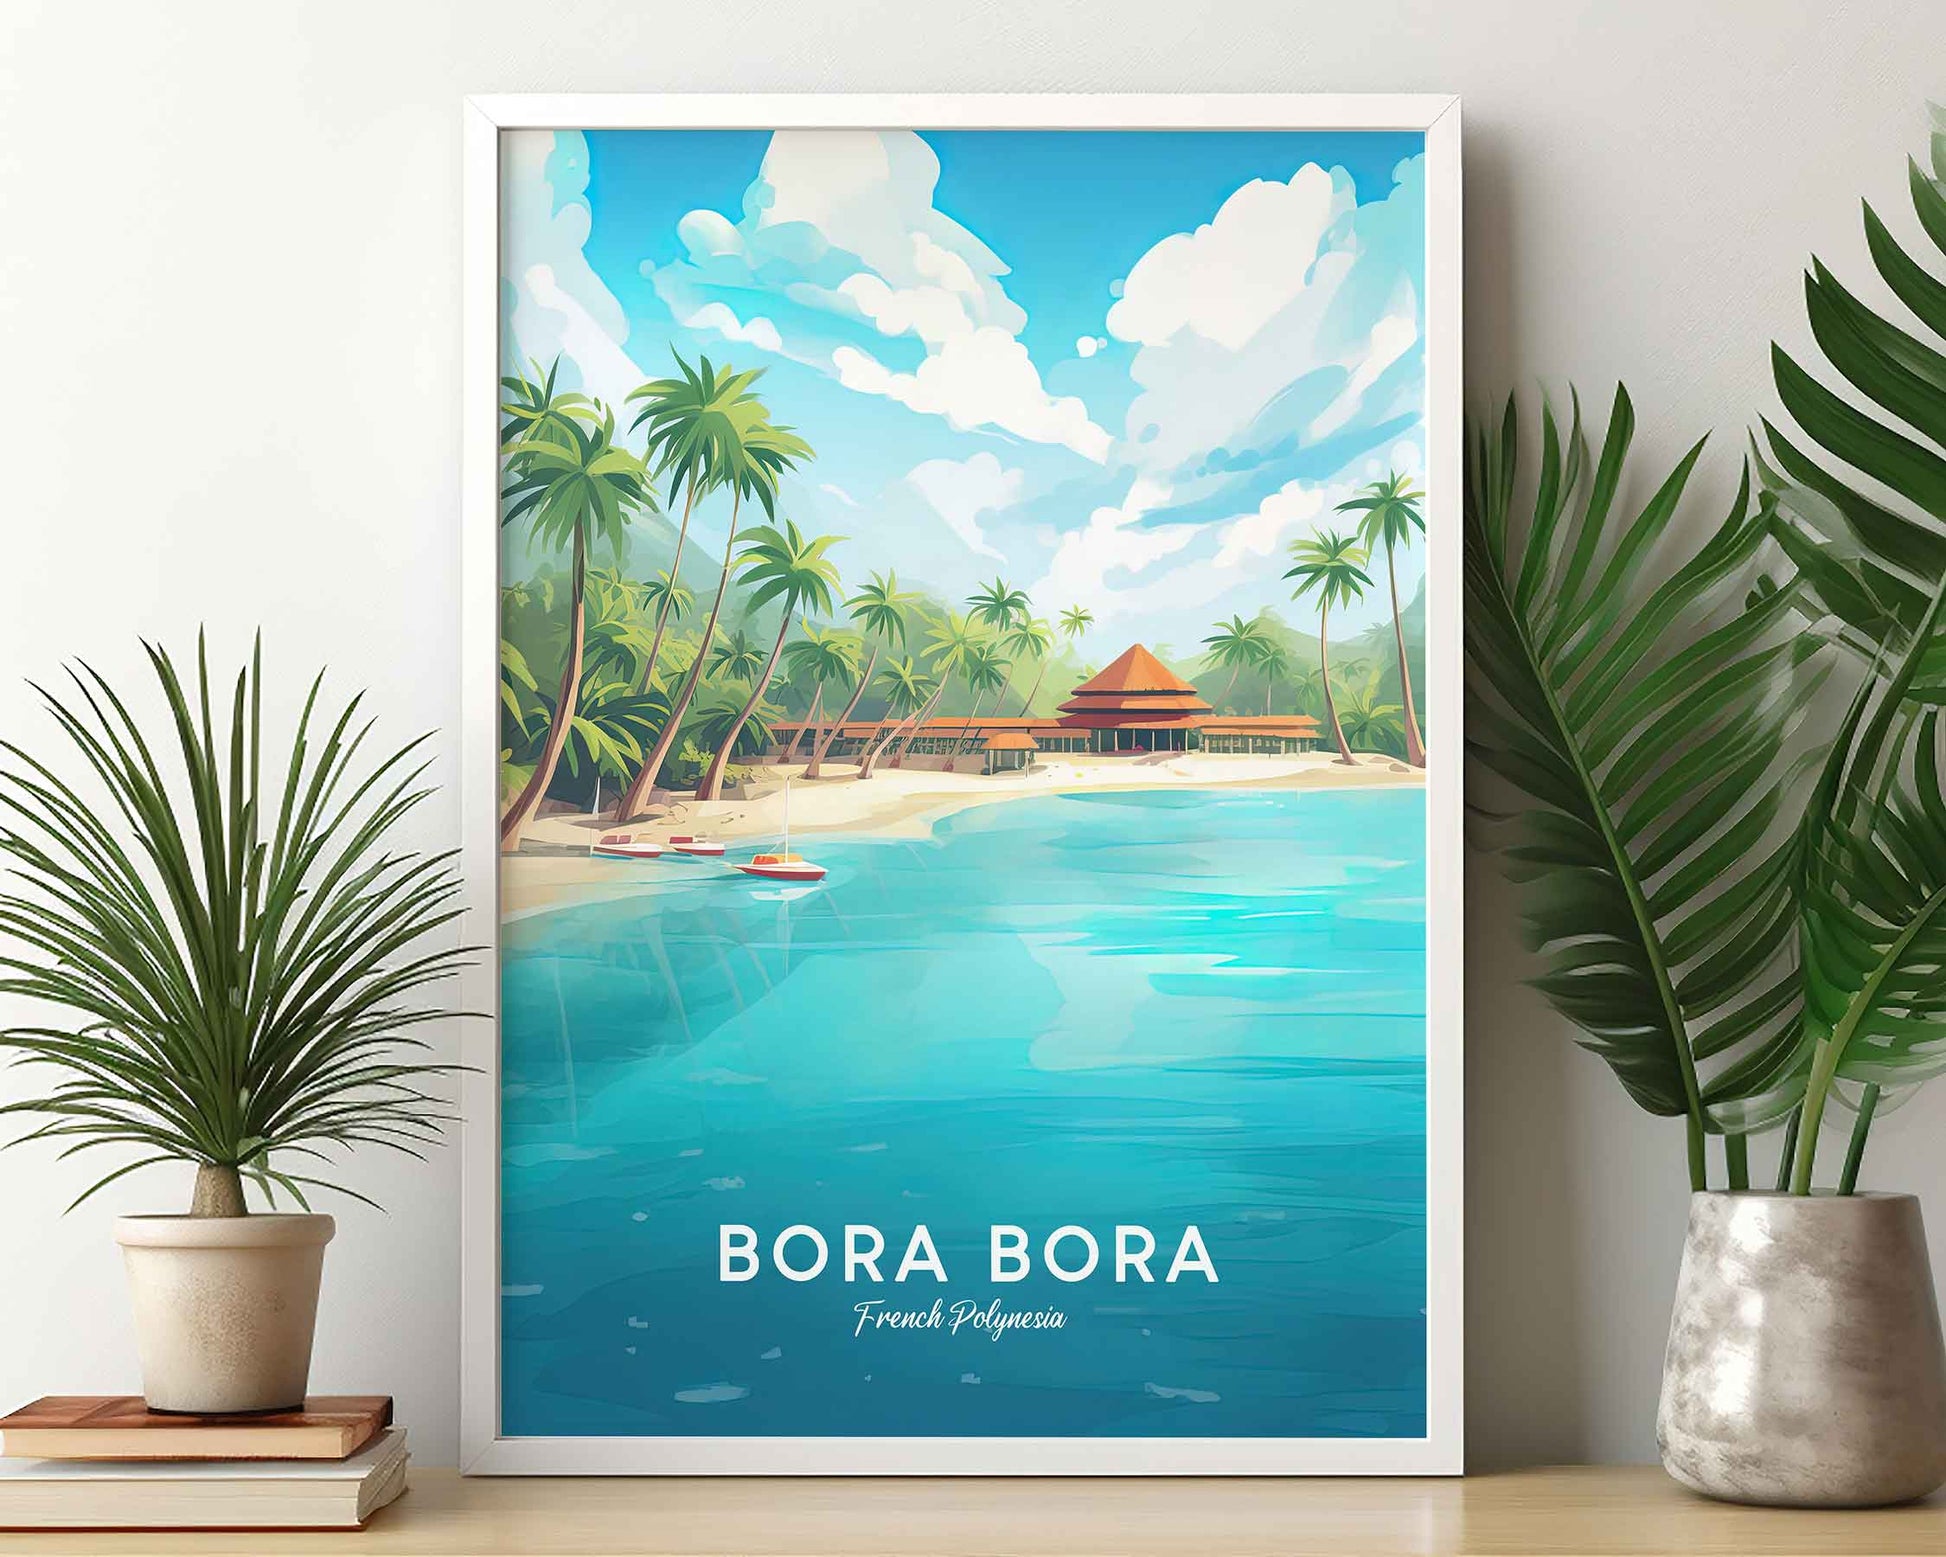 Framed Image of Bora Bora Wall Art Print Travel Illustration Posters